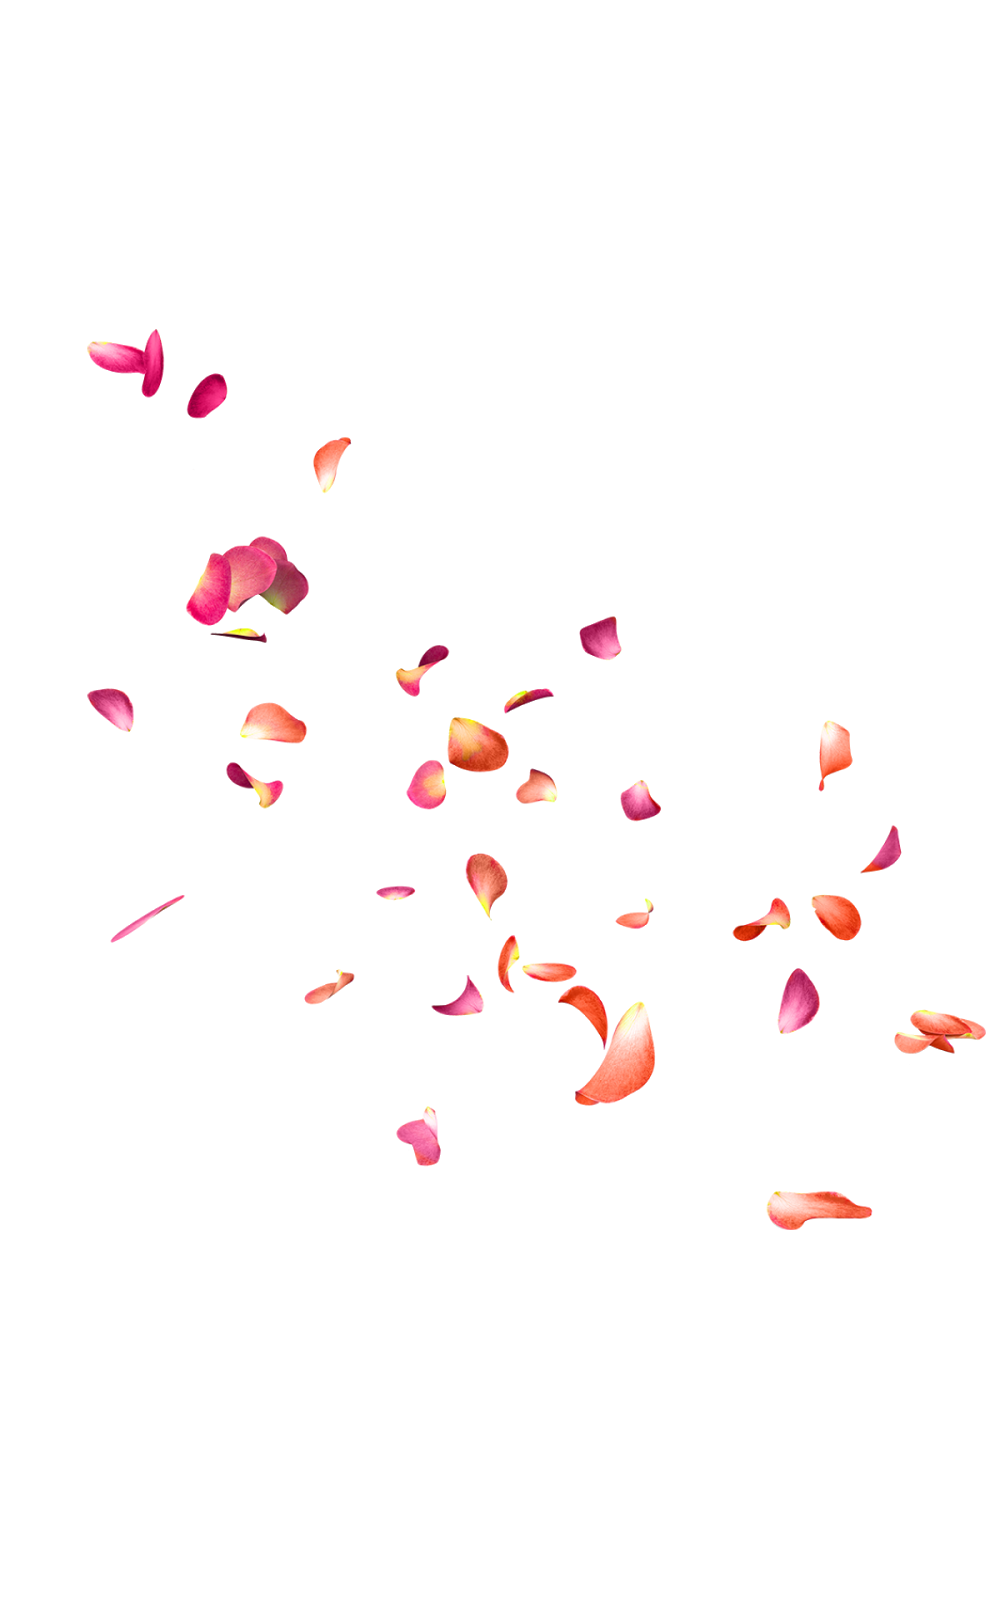 Falling Rose Petals PNG Free Download